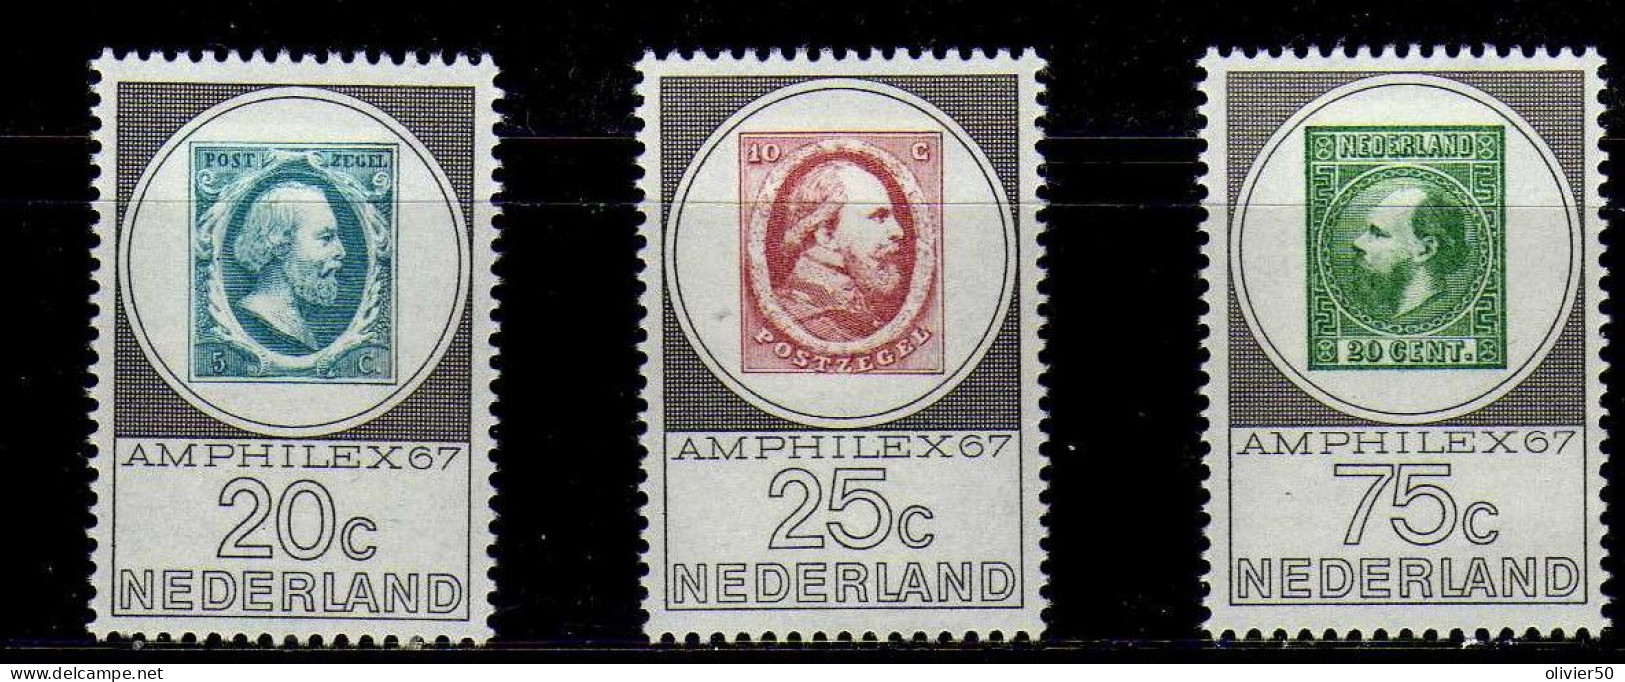 Pass-Bas - 1967 - Exposition Philatelique D'Amsterdam -  Neufs* - MLH - Unused Stamps